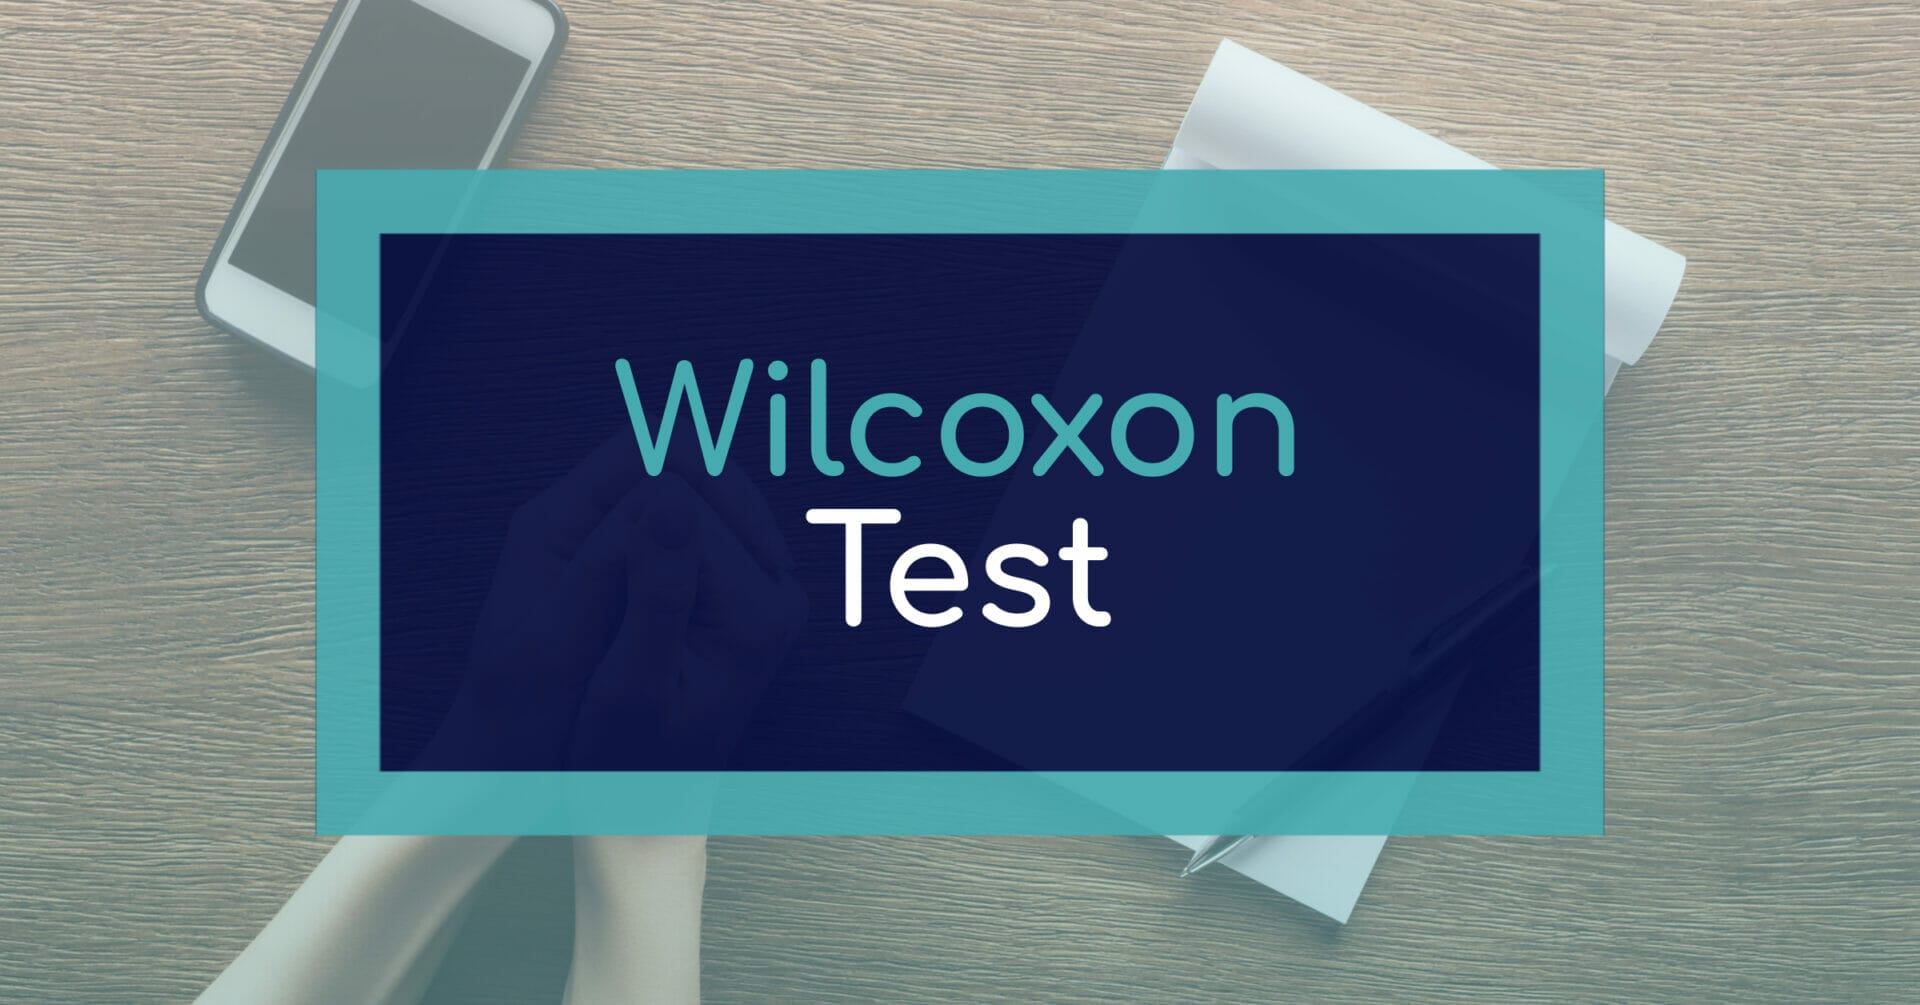 Wilcoxon Test